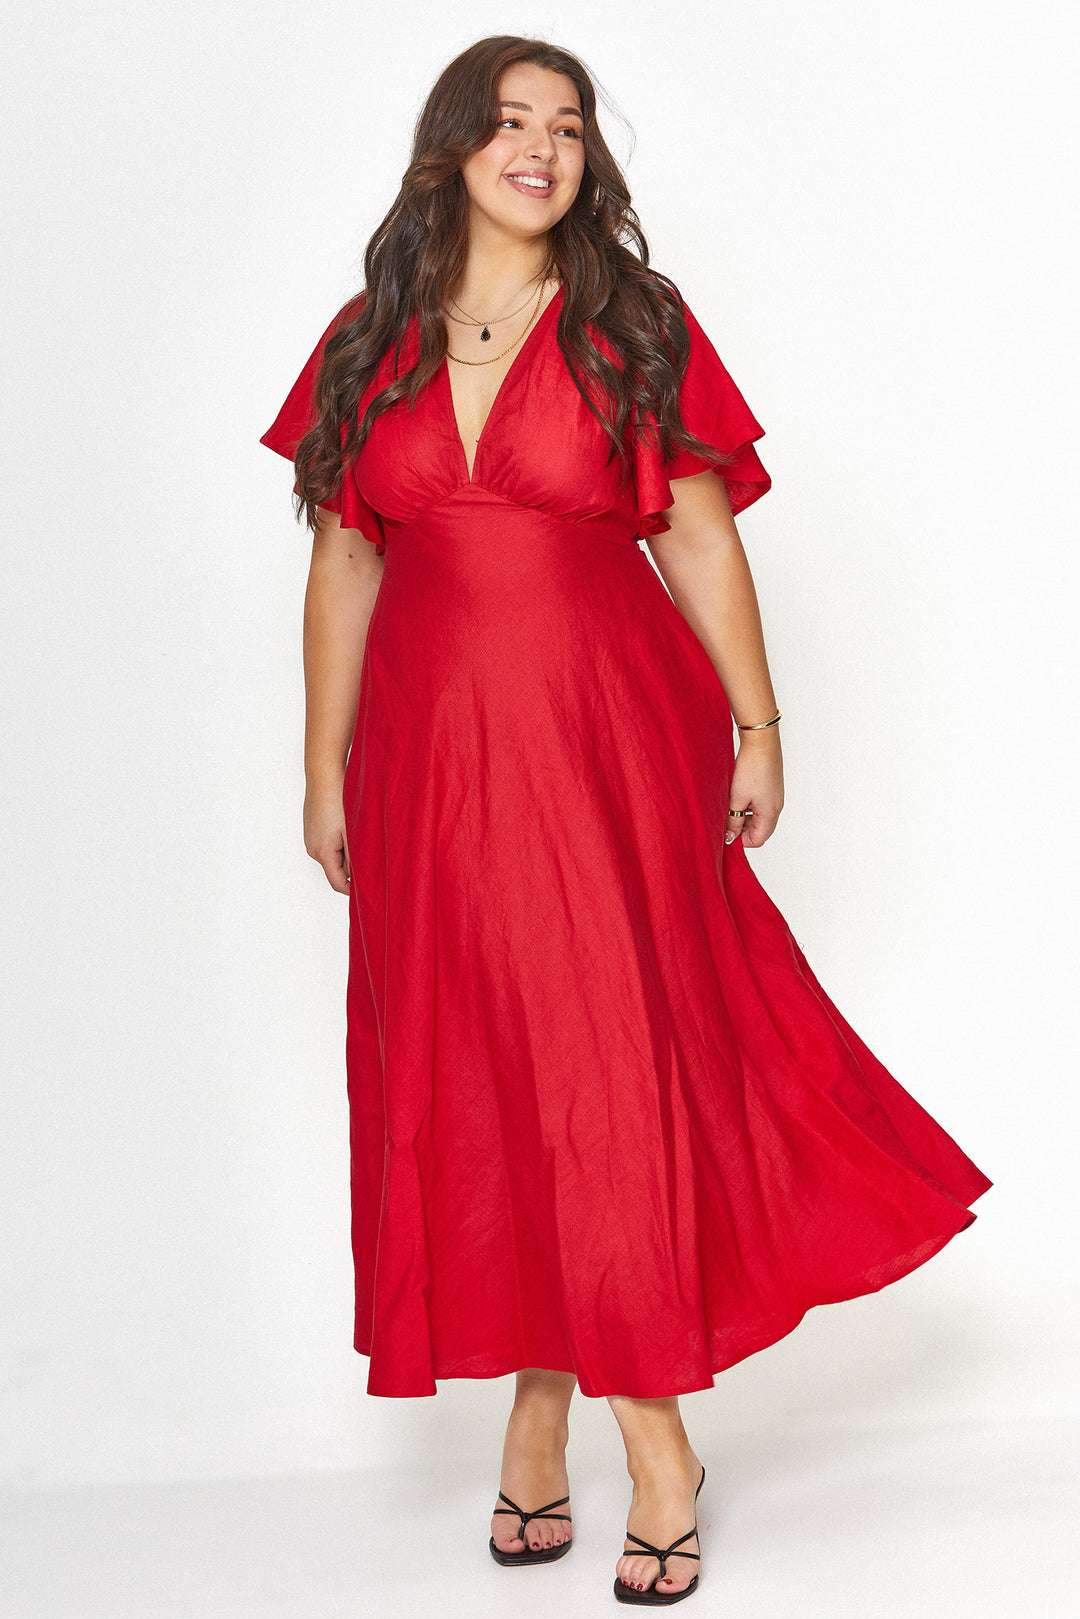 Athena Rose Red Dress